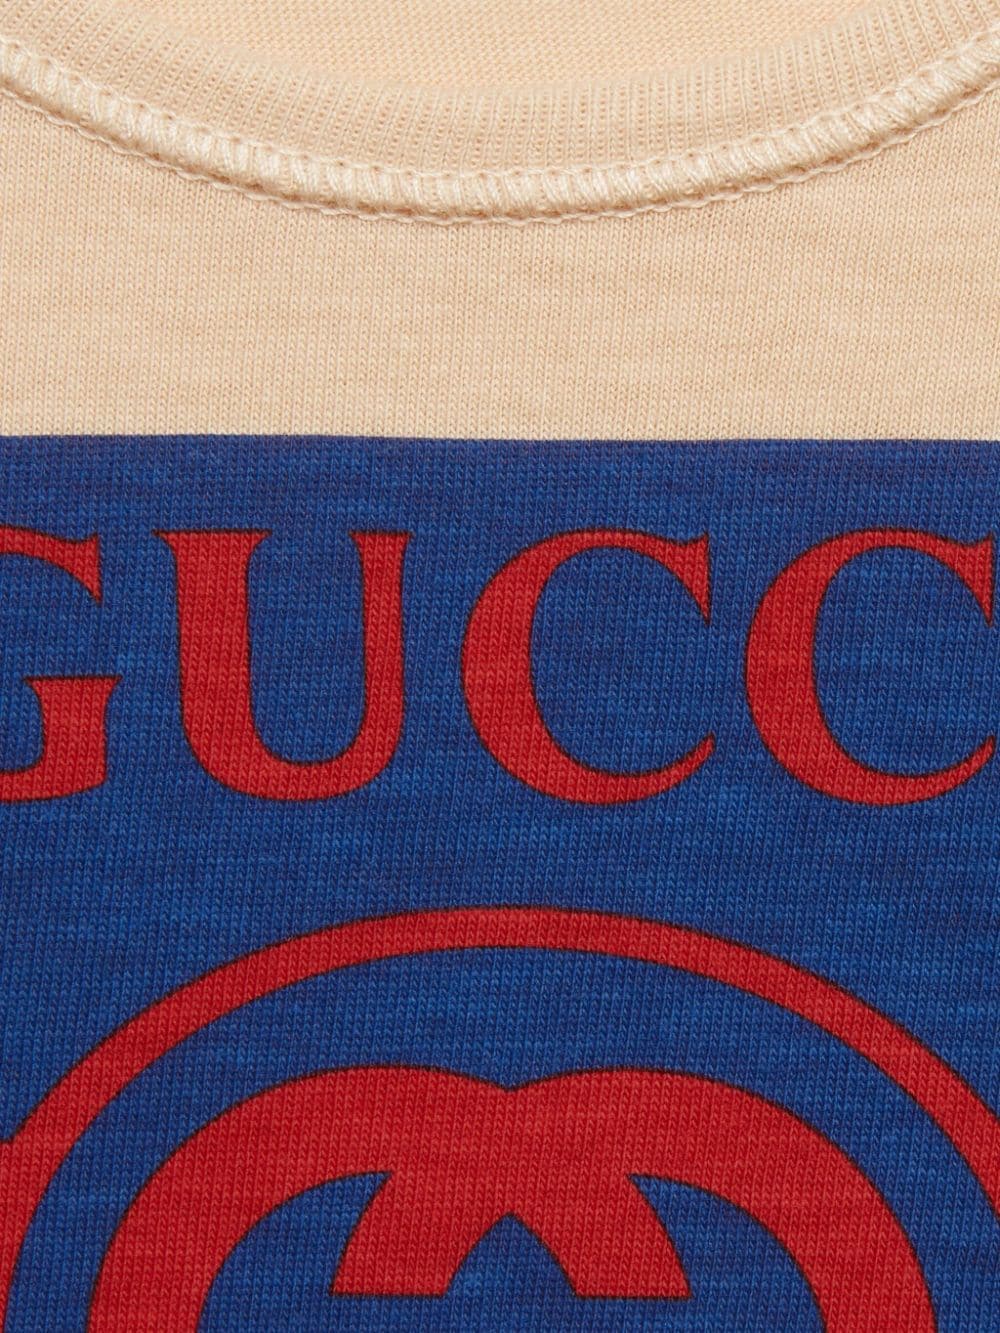 Gucci Kids tutina con logo